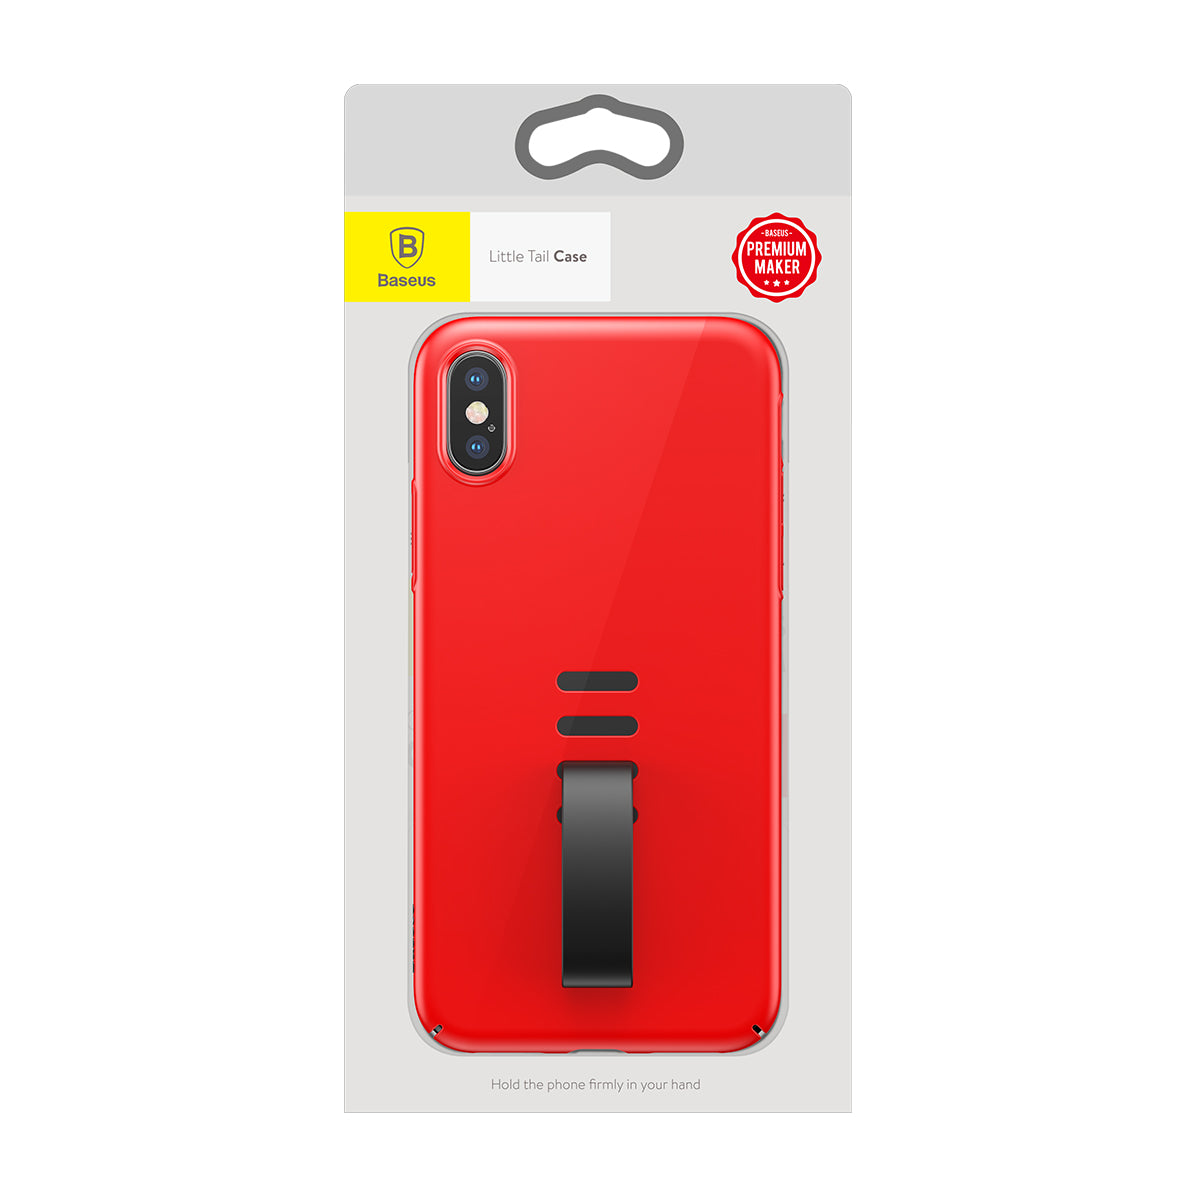 iPhone-X-Baseus-Little-Tail-Case-Red-Packaging_RZJGVSFFFSF7.jpg